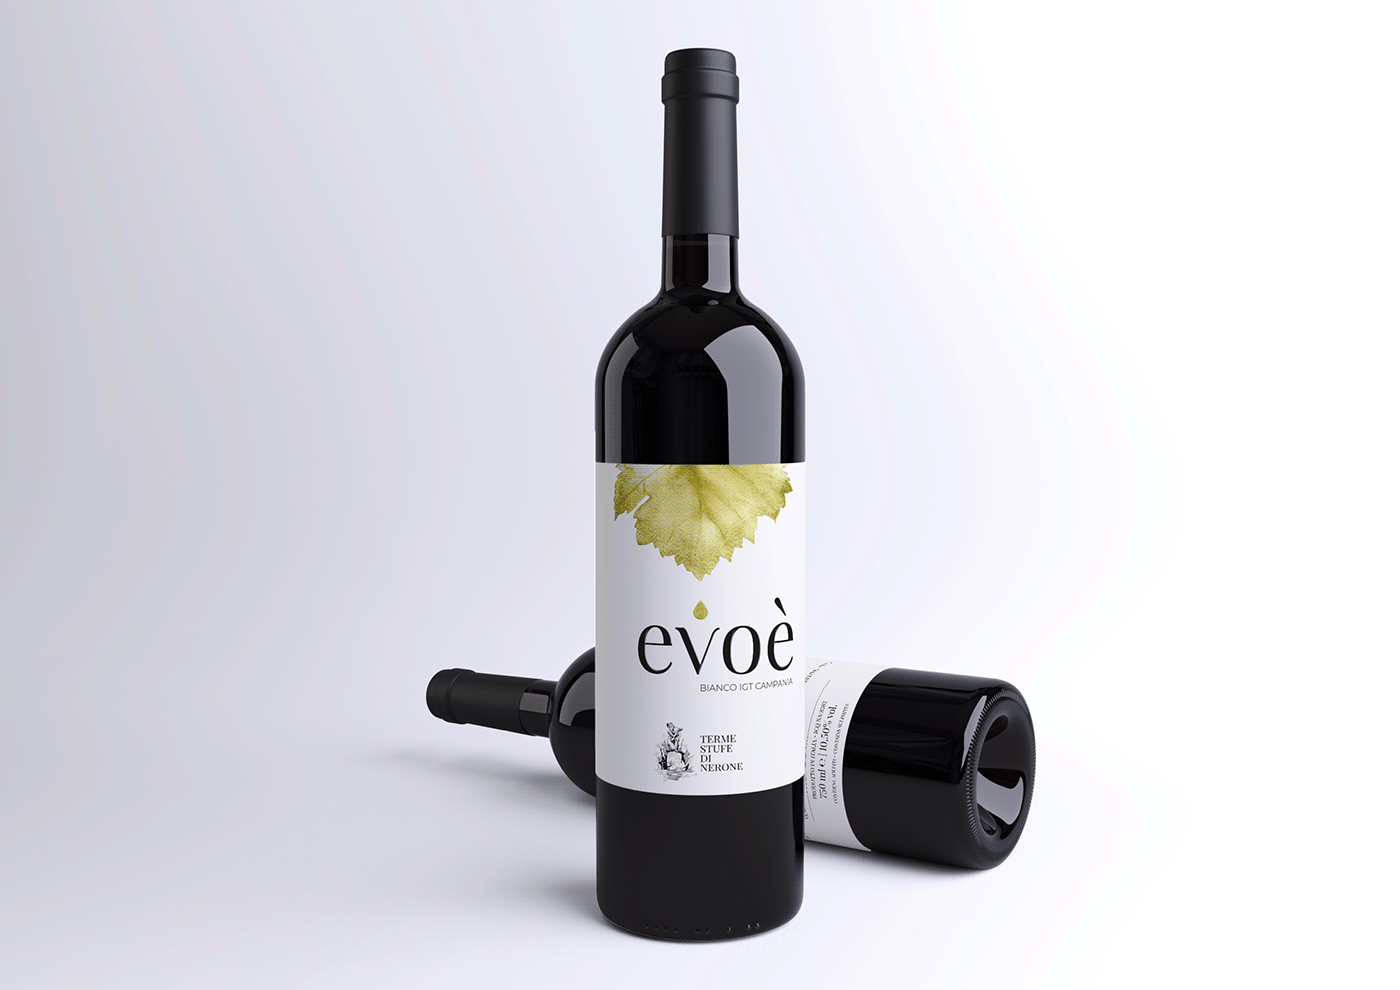 alterodesign grahic graphic design  Label labeling wine wine label